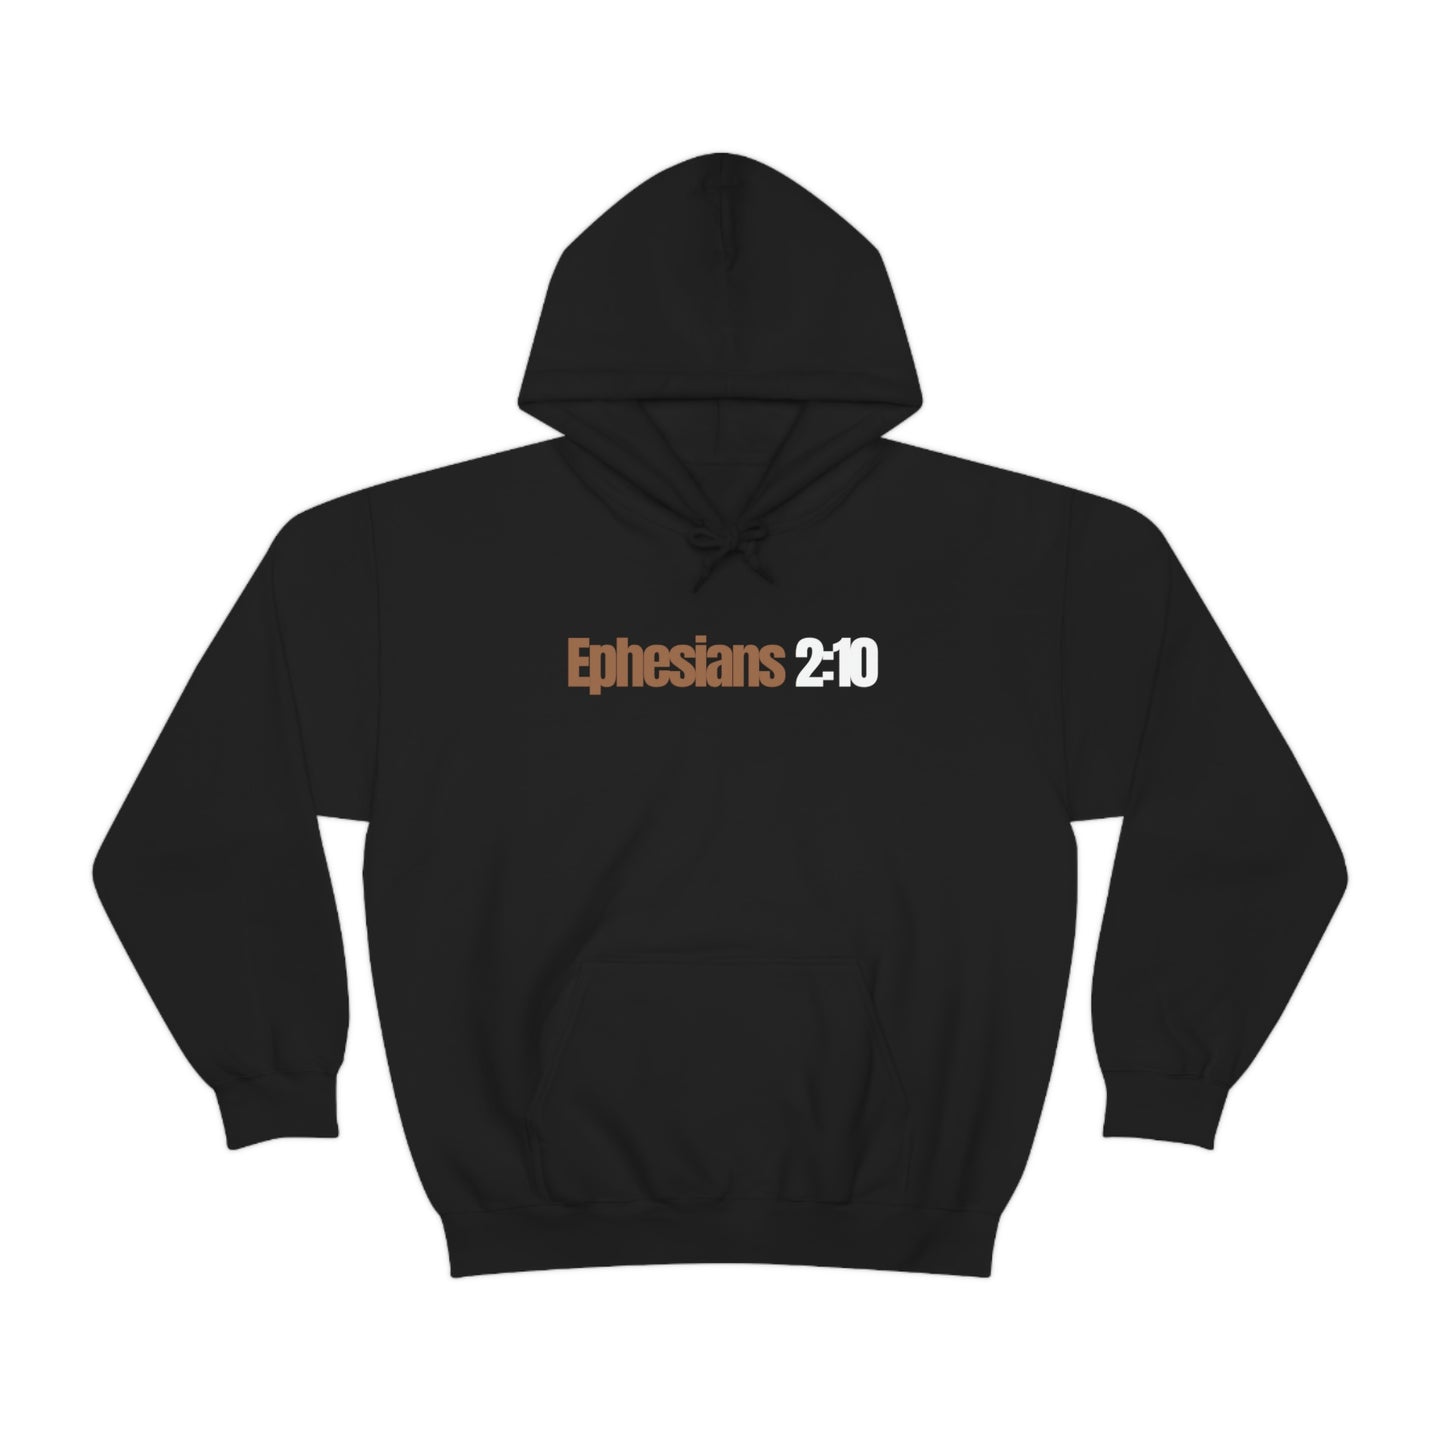 "Ephesians 2:10" Unisex Heavy Blend™ Hooded Sweatshirt - Black, Chocolate, Navy Blue, Gray, Dark Gray, & Hunter Green Available